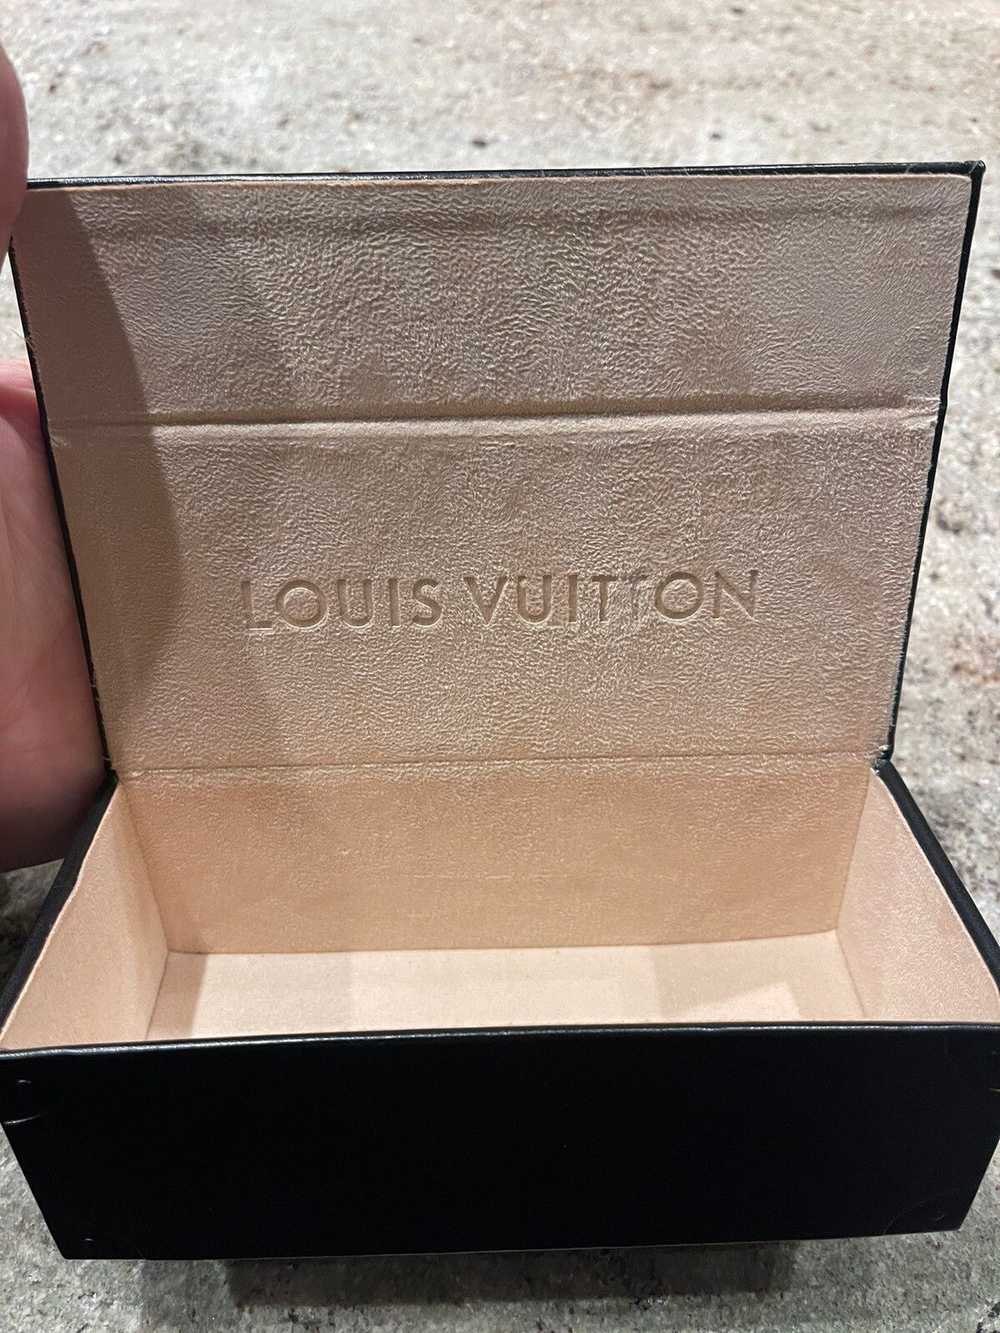 Louis Vuitton Louis Vuitton cyclone - image 7